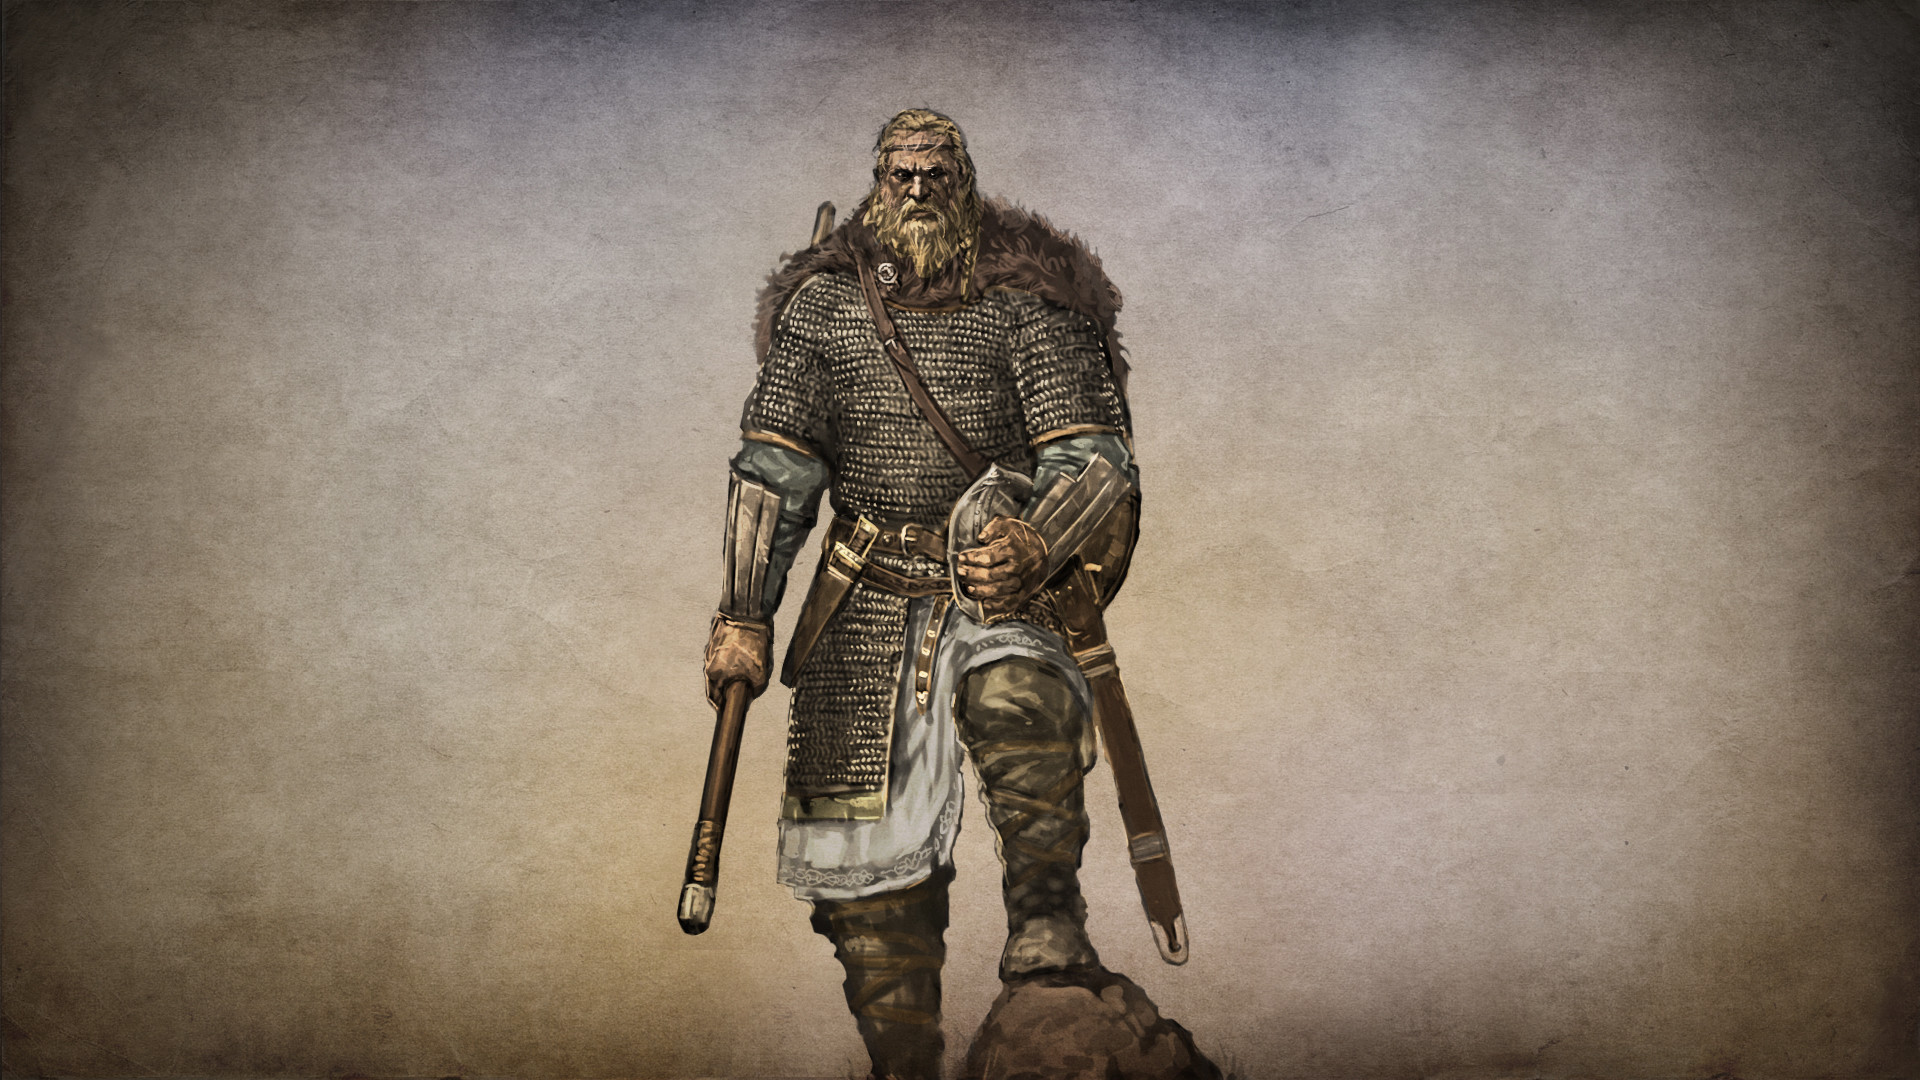 Viking Warrior Hd Wallpapers